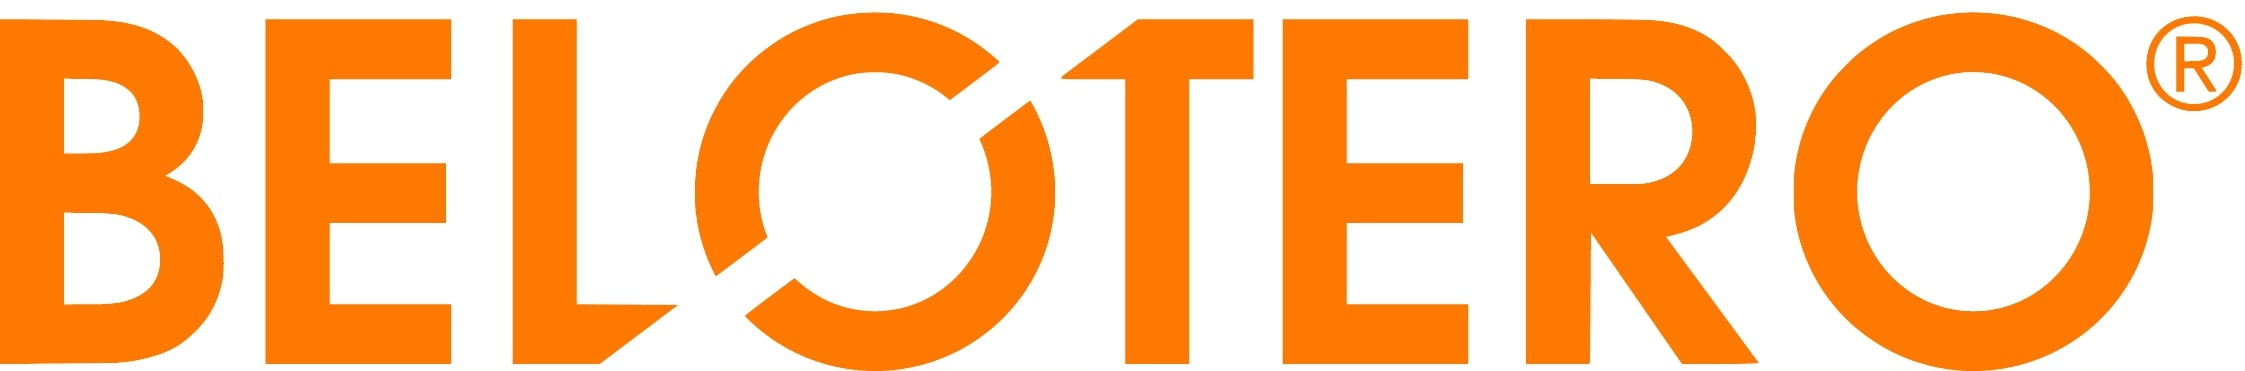 gem20170811belotero logo